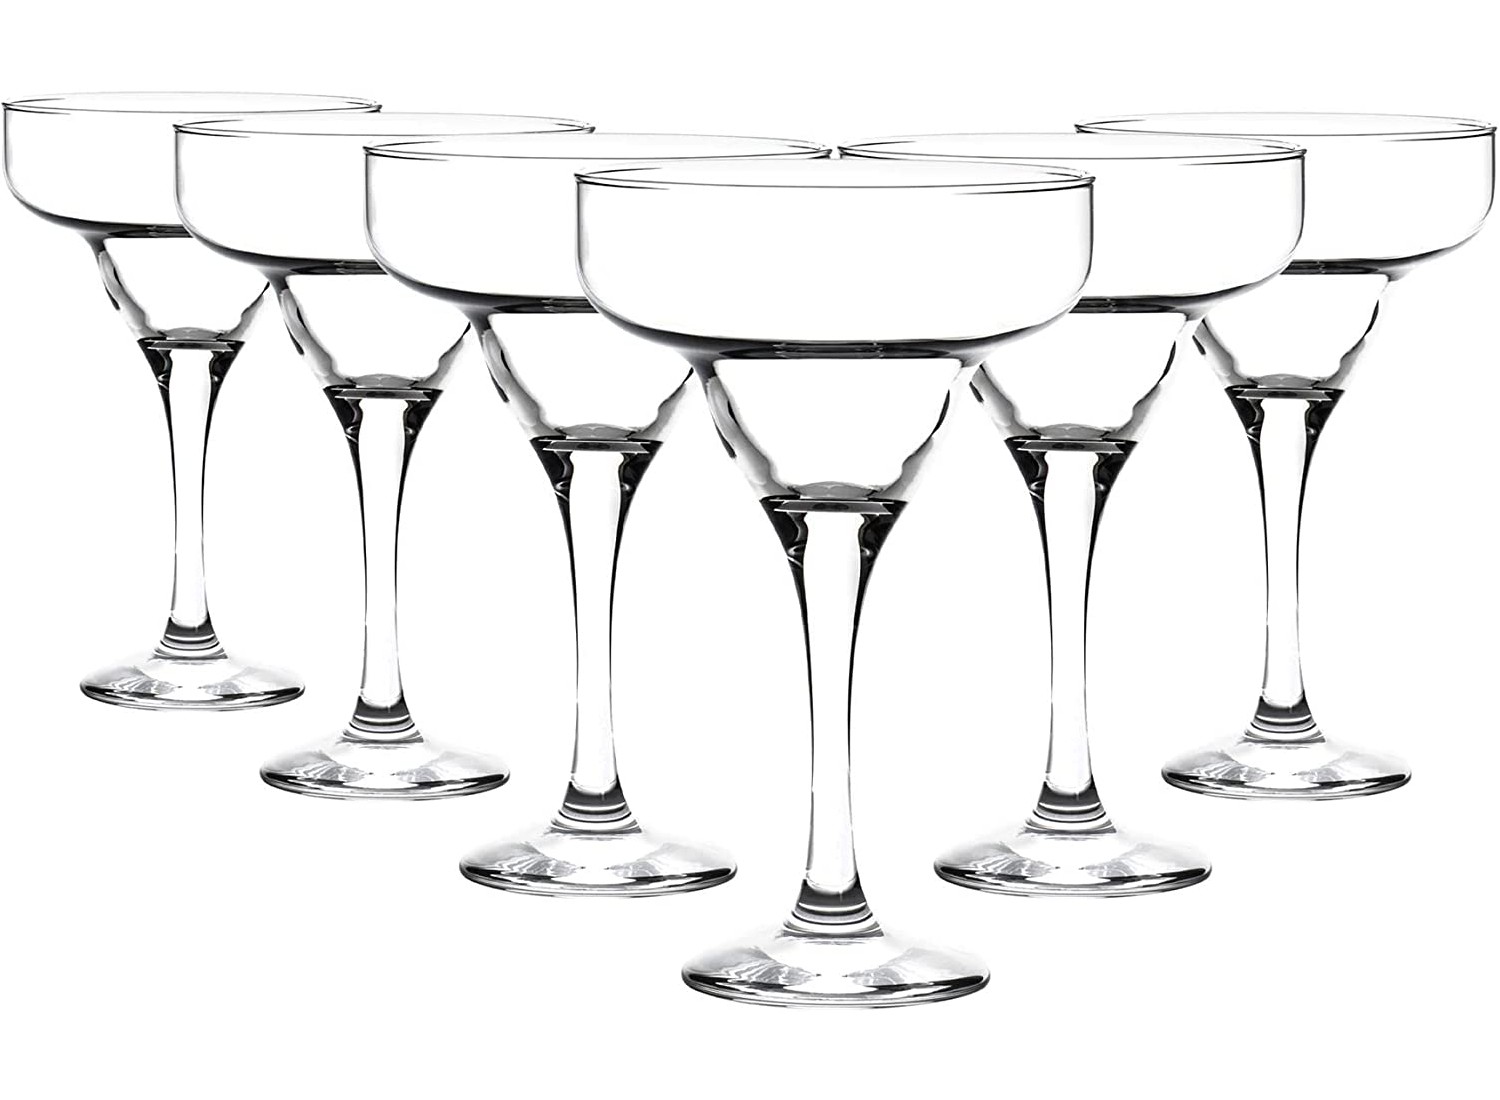 https://www.brit.co/reviews/wp-content/uploads/2023/04/Rink-Drinks-Margarita-Glasses-britco.jpg